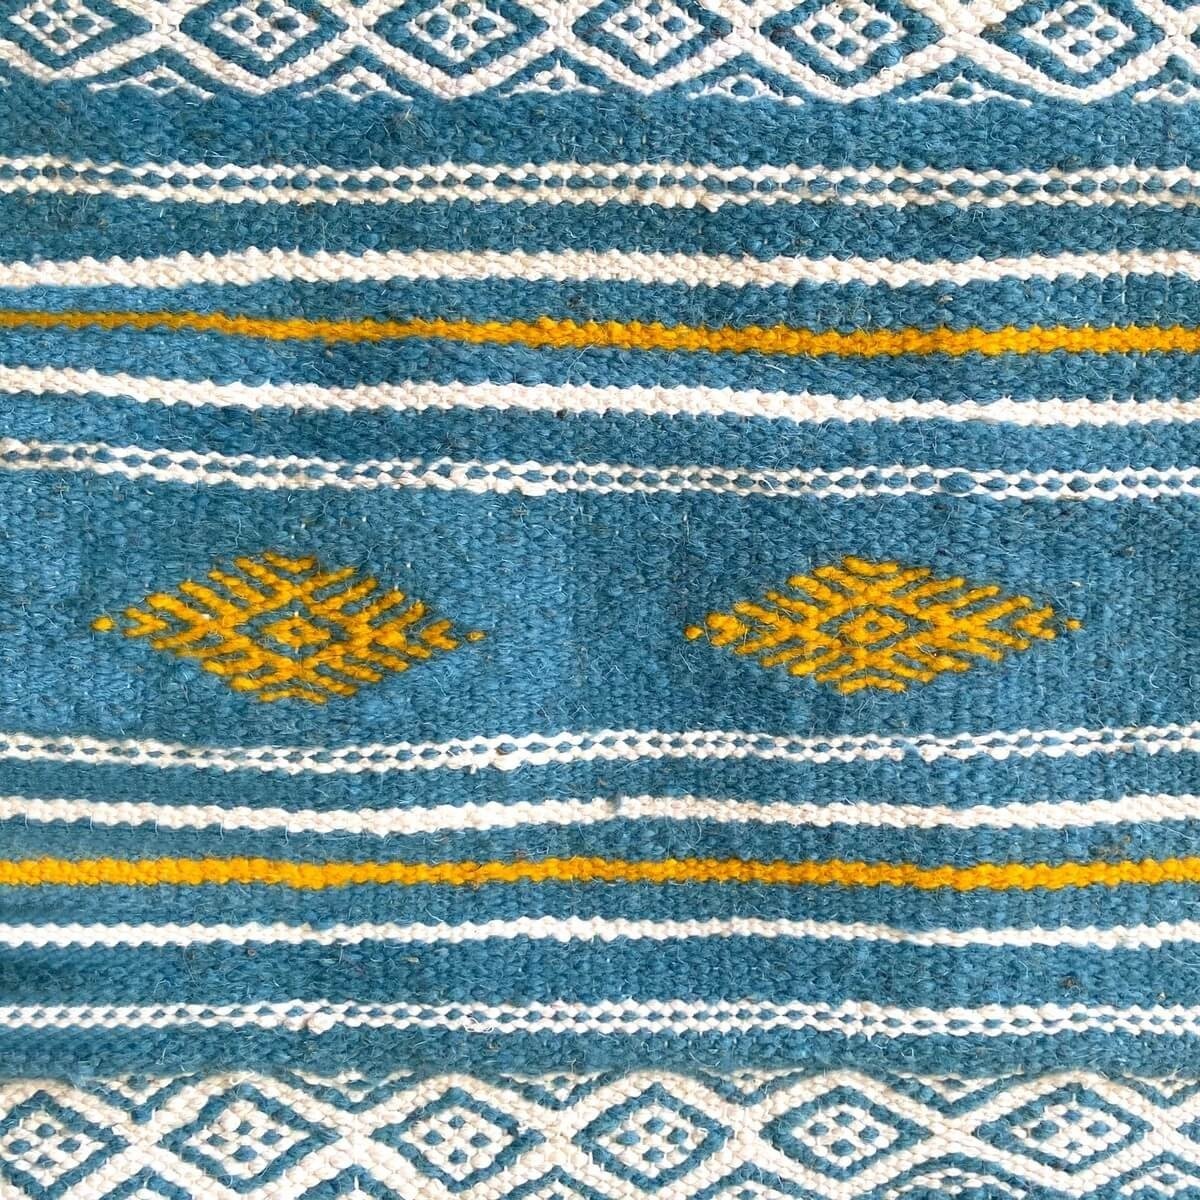 Berber tapijt Tapijt Kilim Oued Zitoun 136x244 Turkoois/Jeel/Rood (Handgeweven, Wol, Tunesië) Tunesisch kilimdeken, Marokkaanse 